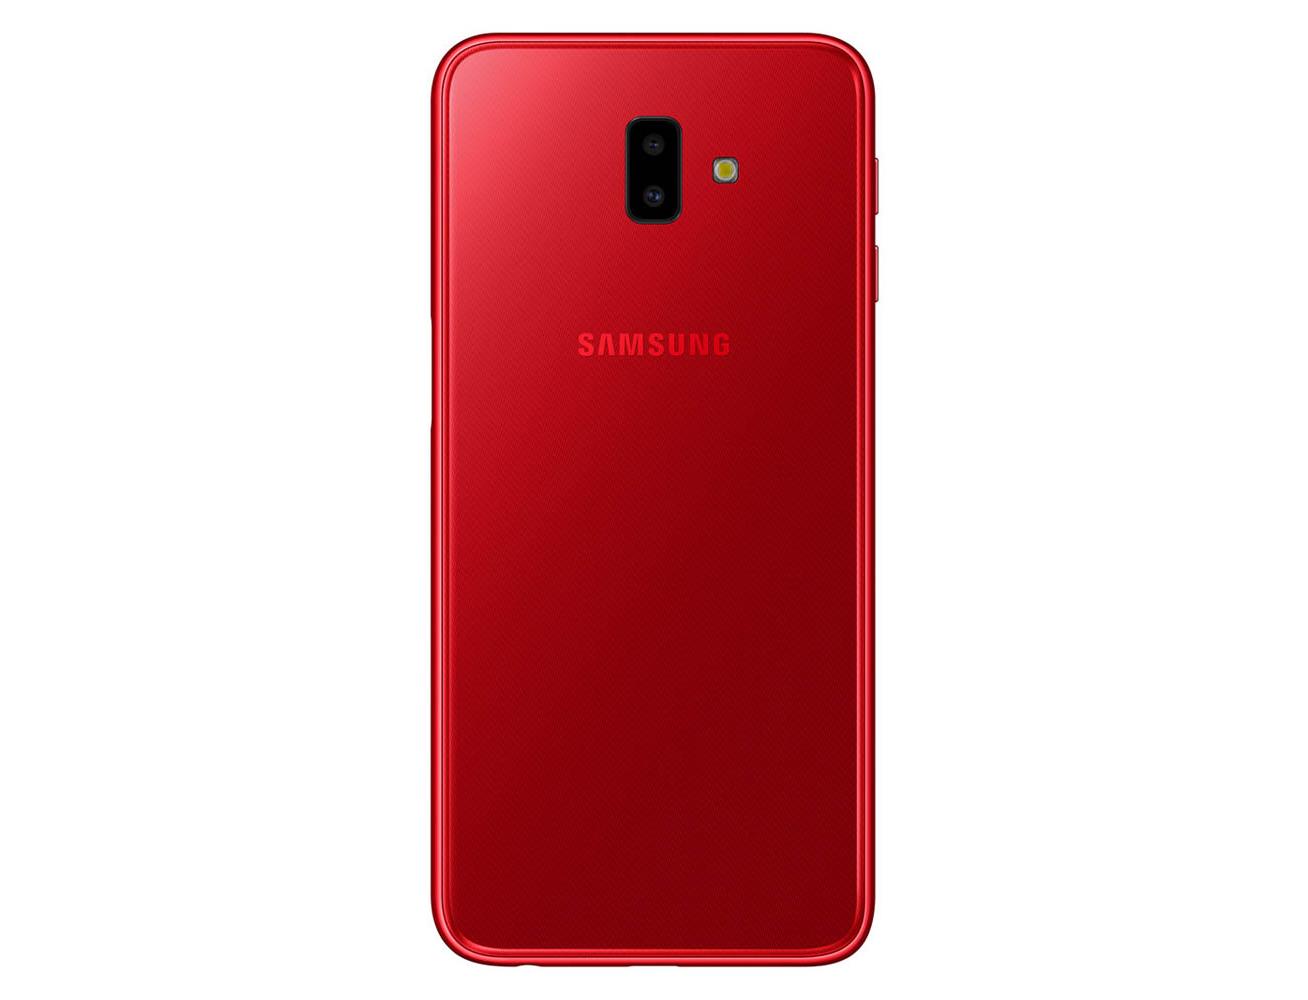 Samsung galaxy x6. Samsung Galaxy j6+. Samsung Galaxy j6 Plus 2018. Samsung Galaxy j6 Plus 32gb. Samsung Galaxy j6+ (2018).